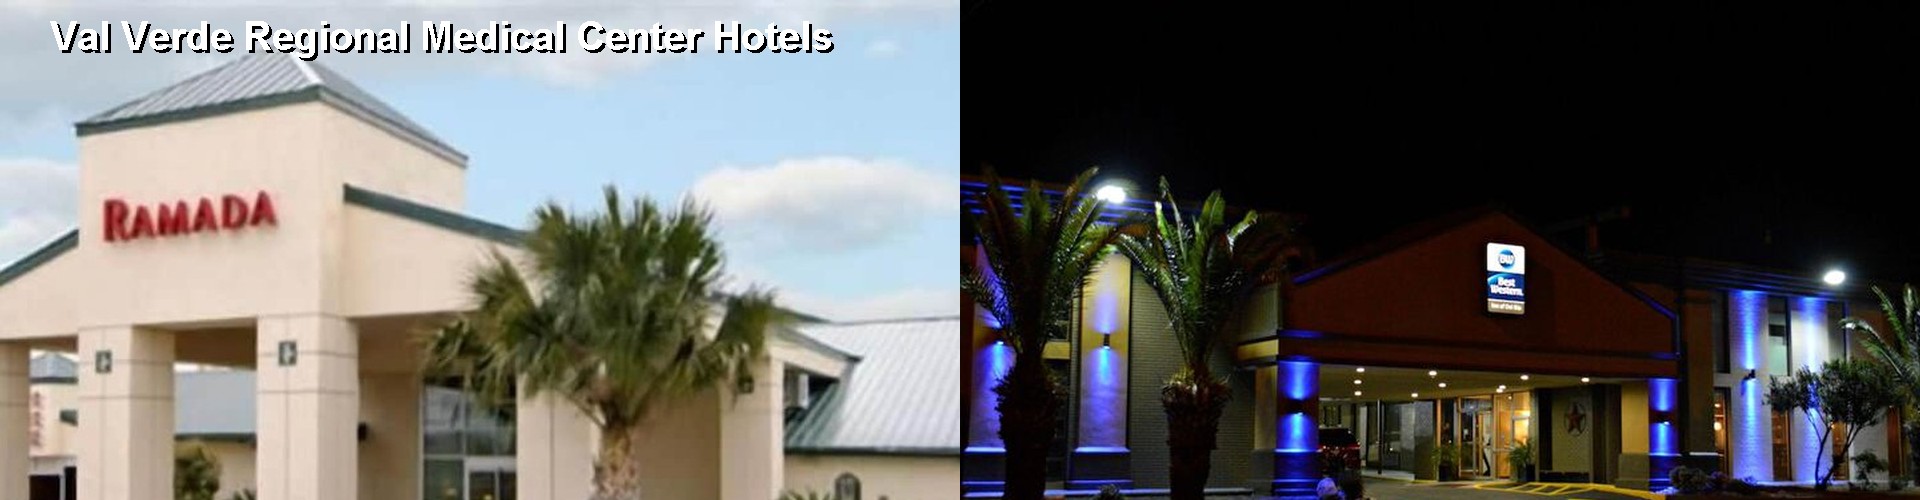 4 Best Hotels near Val Verde Regional Medical Center